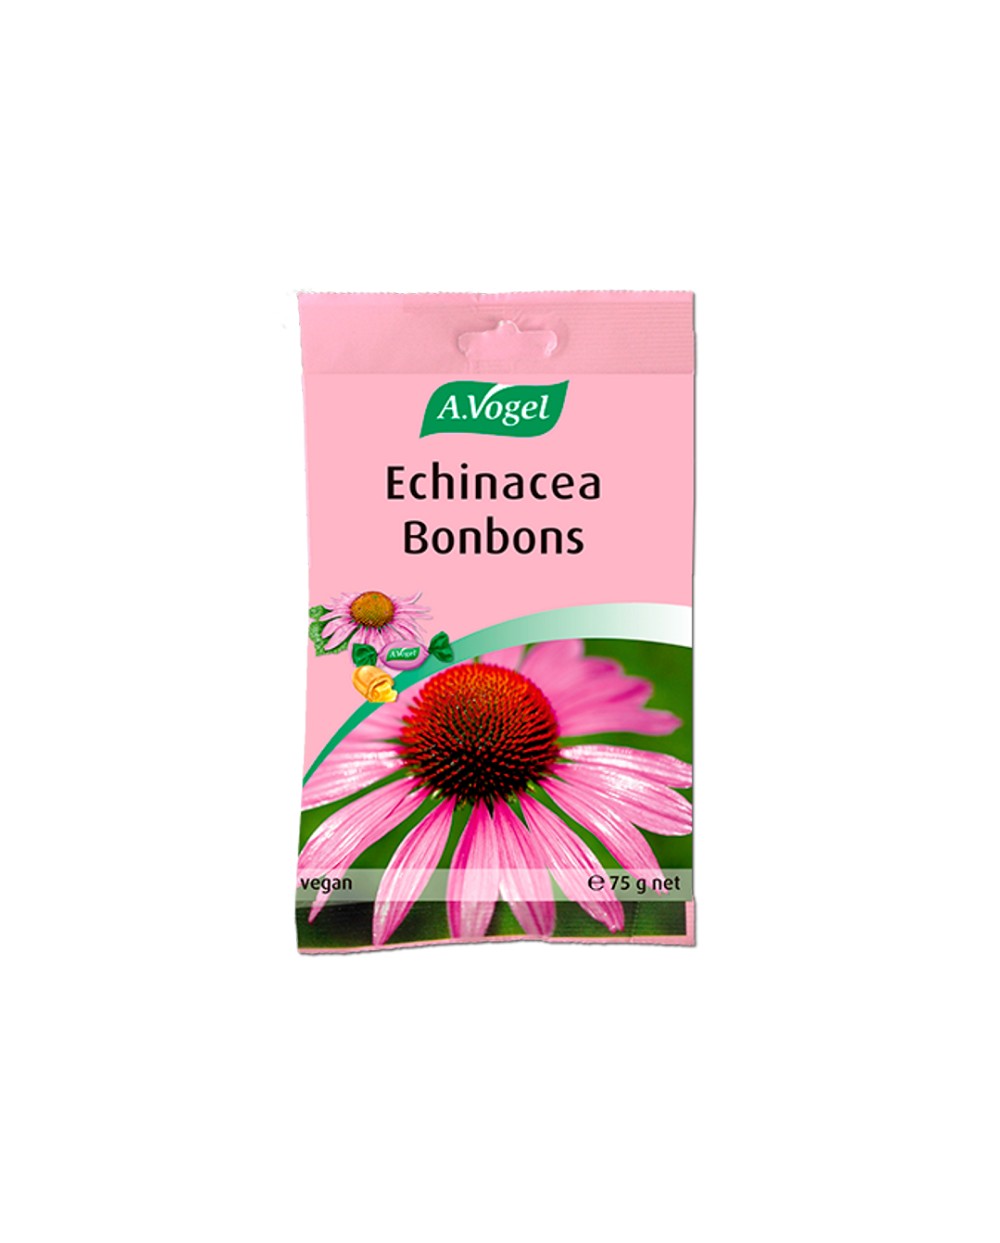 Echinacea Bonbons
Caramelo relleno de extracto de planta fresca de Echinacea purpurea